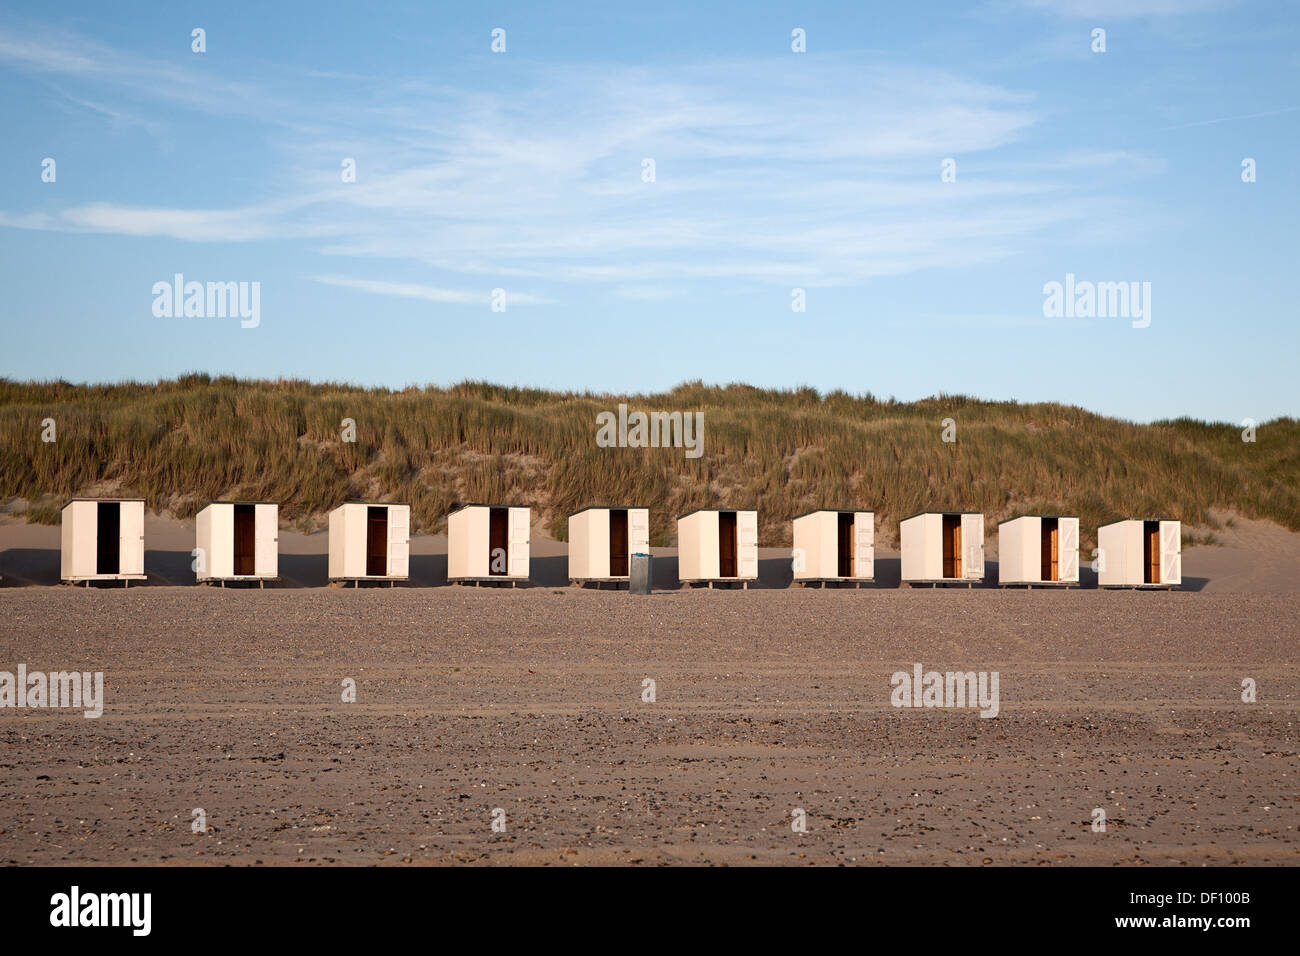 Row of ten empty, white beach cabins, Westenschouwen, Zeeland, Netherlands Stock Photo